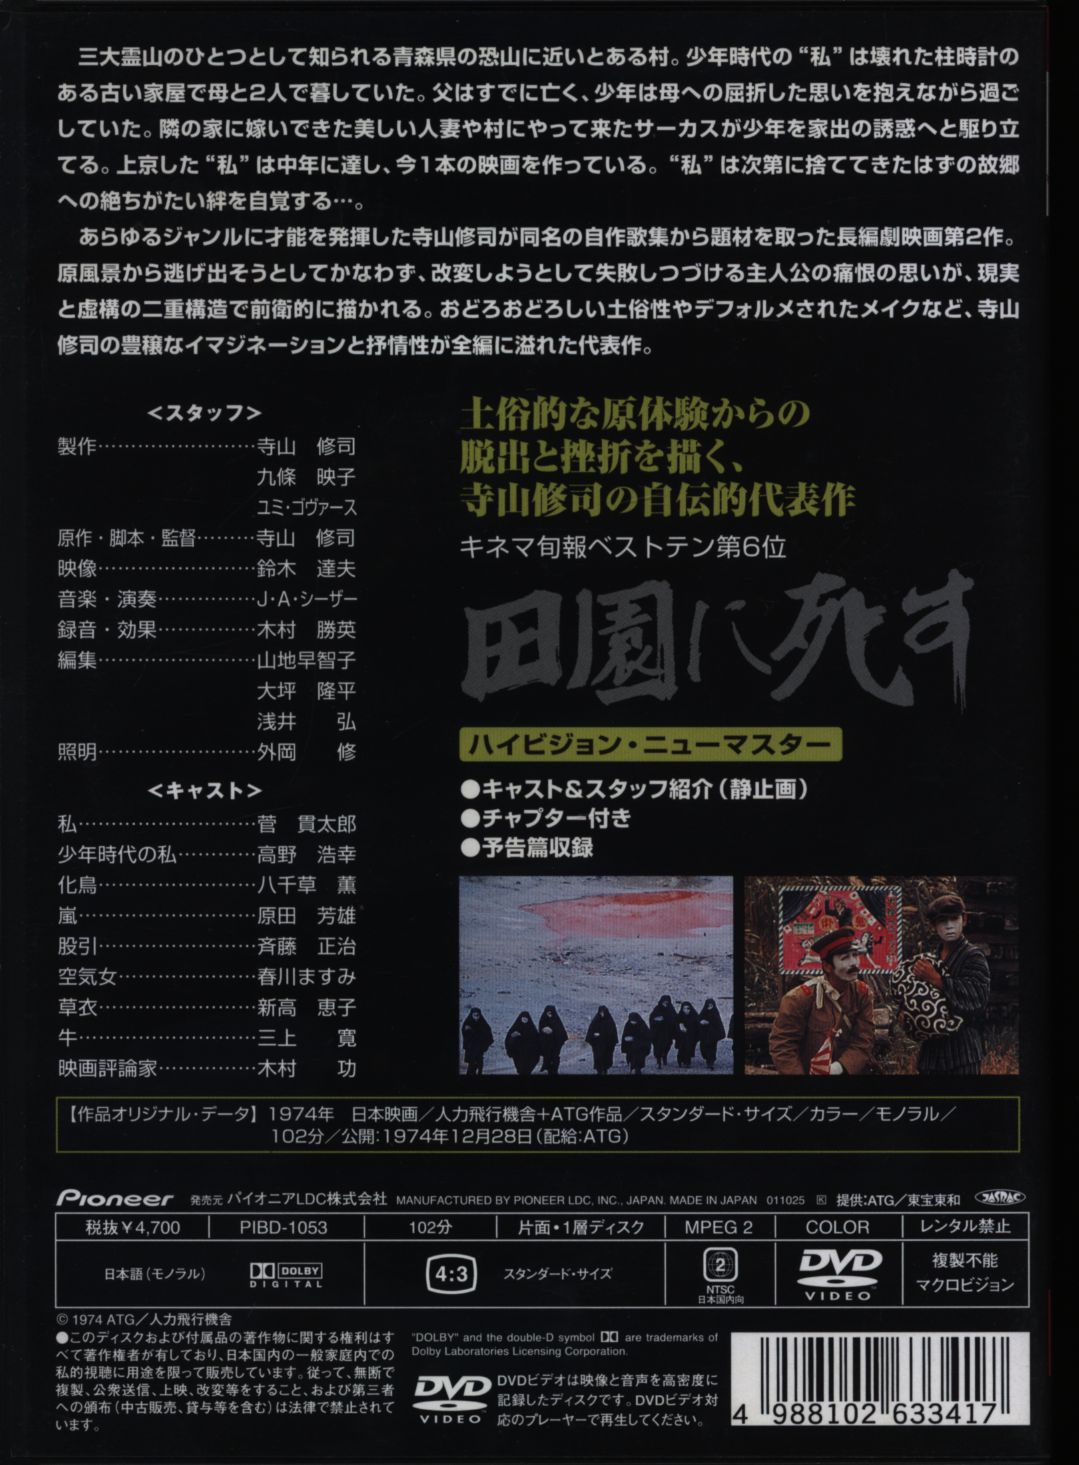 atg 寺山修司ブルーレイBOX(Blu-ray Disc) :20211219132922-02845us